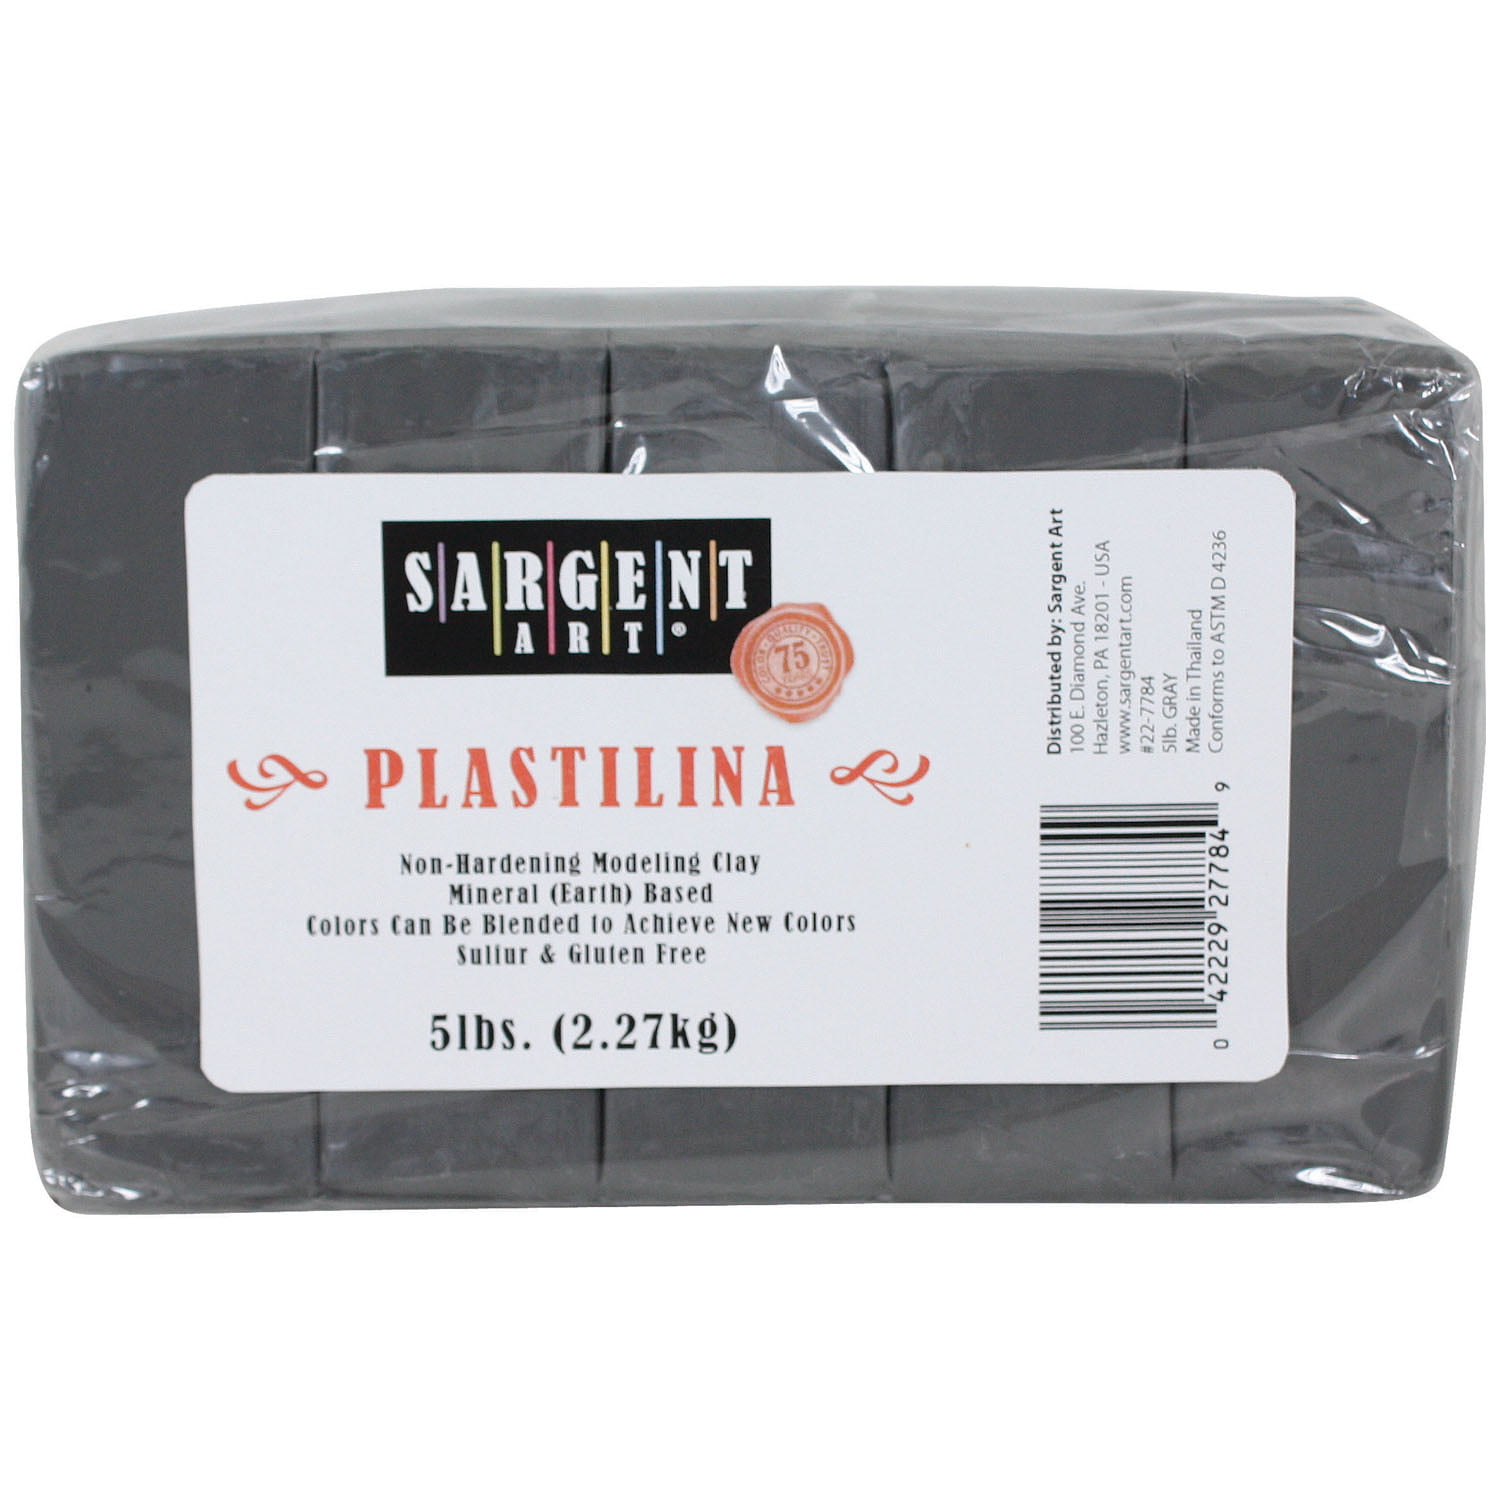 Plastilina Non-Hardening Modeling Clay 